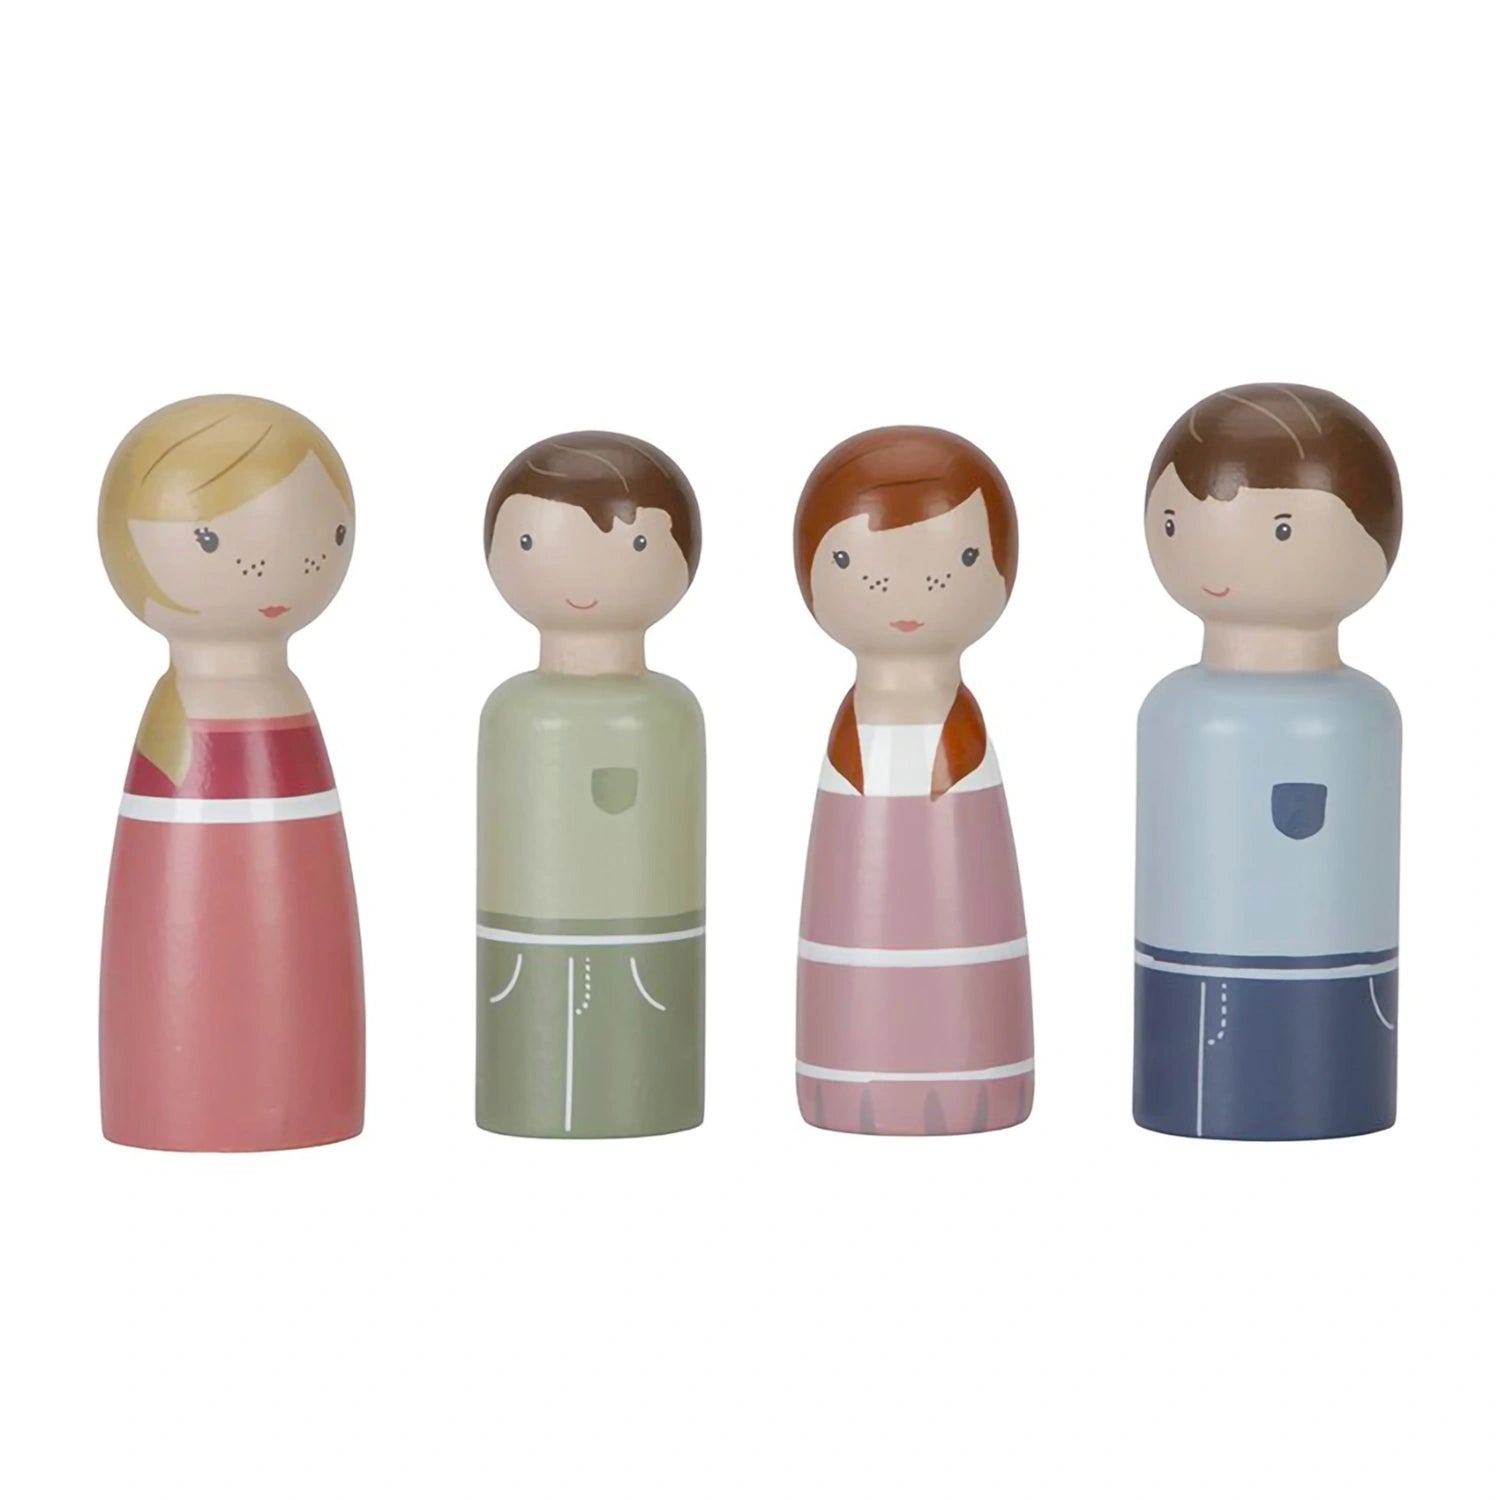 An image of Little Dutch Dollhouse Expansion Family Set - Rosa